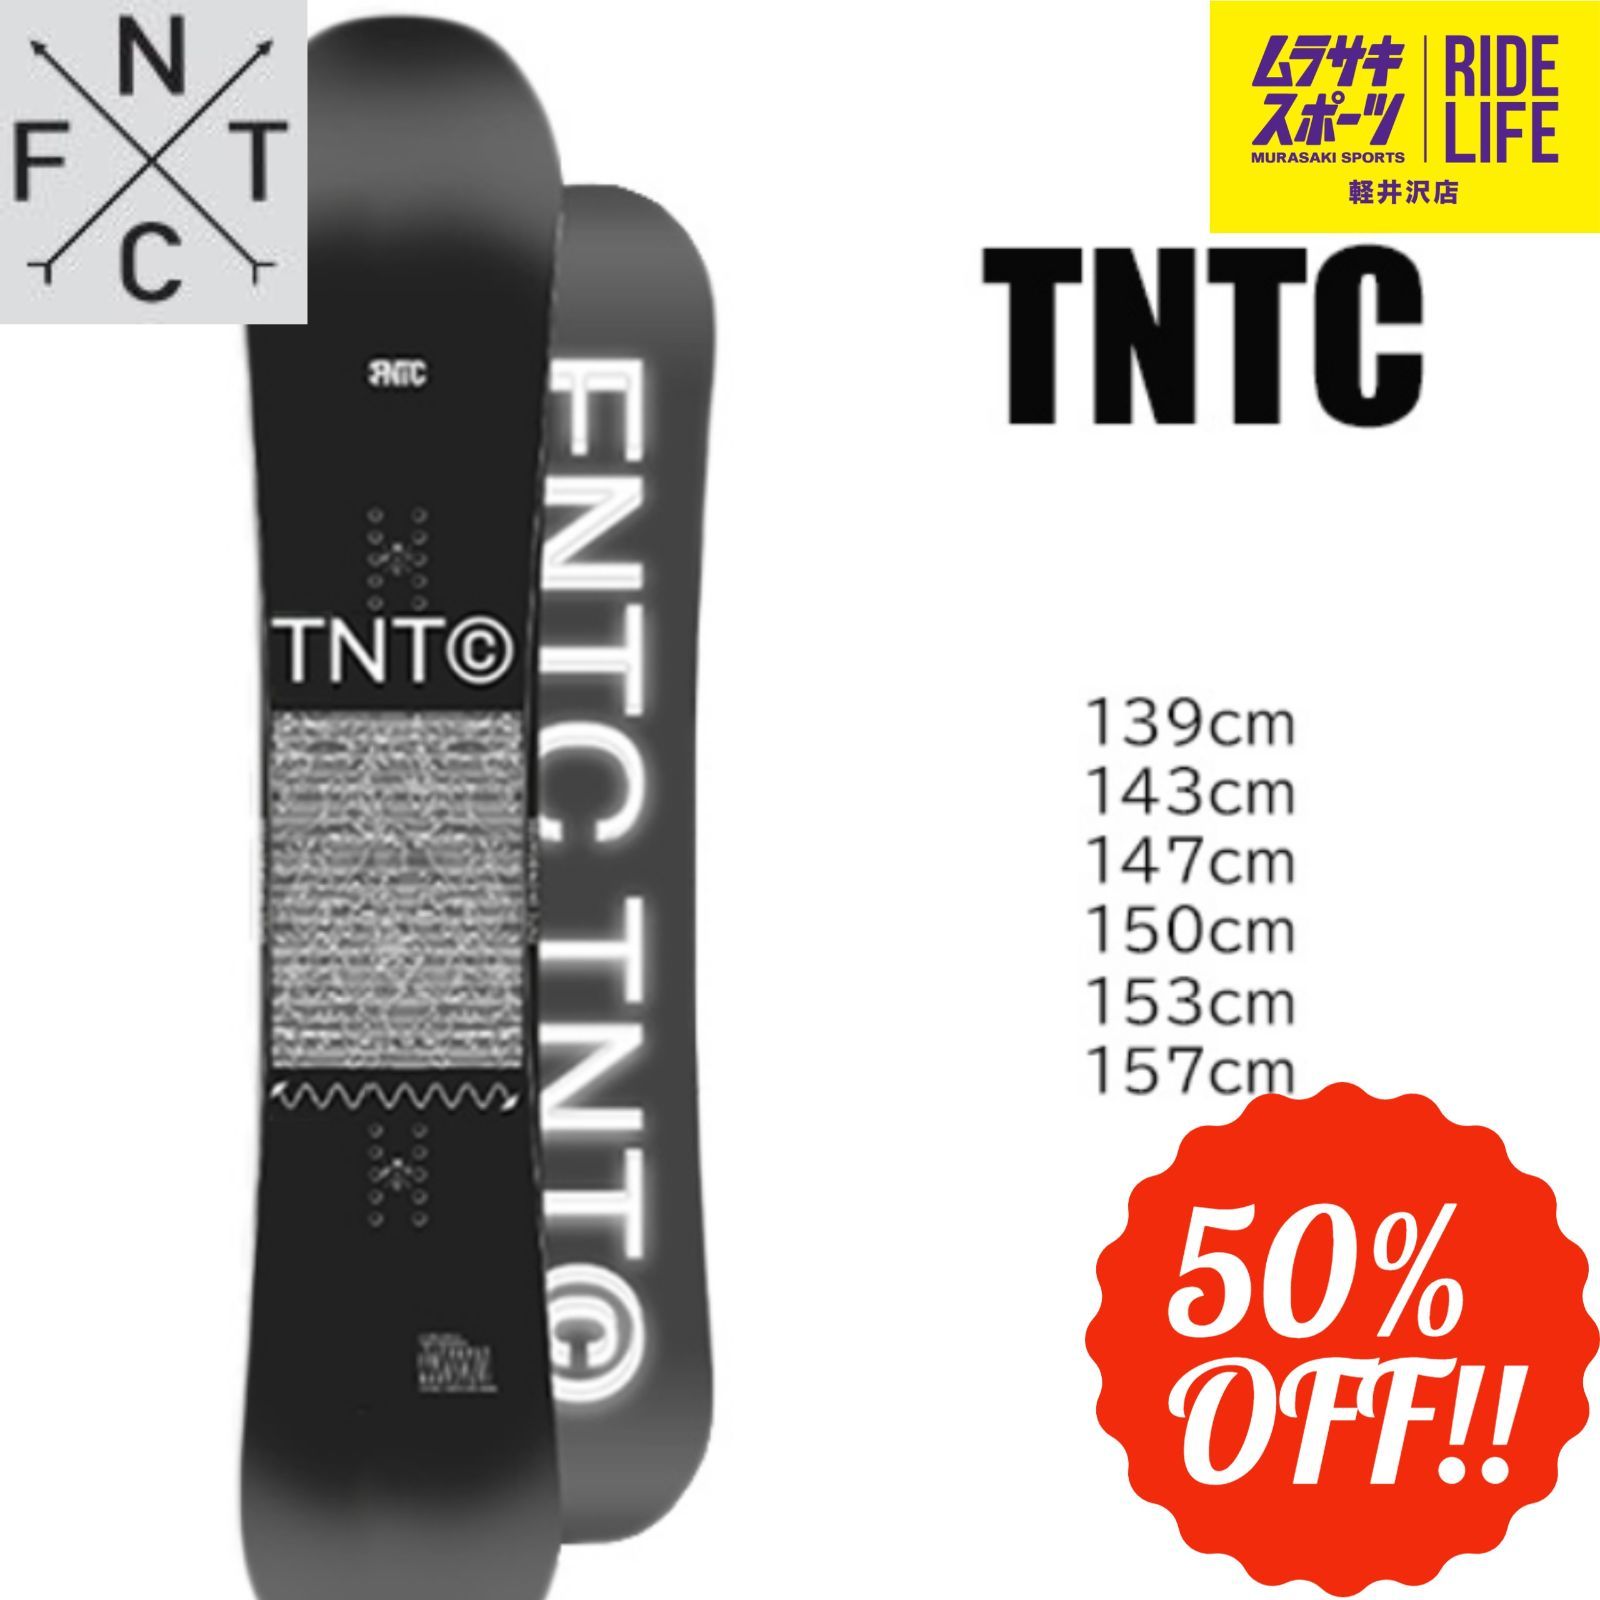 FNTC TNTC ブラック 150cm 22-23 スノーボード板